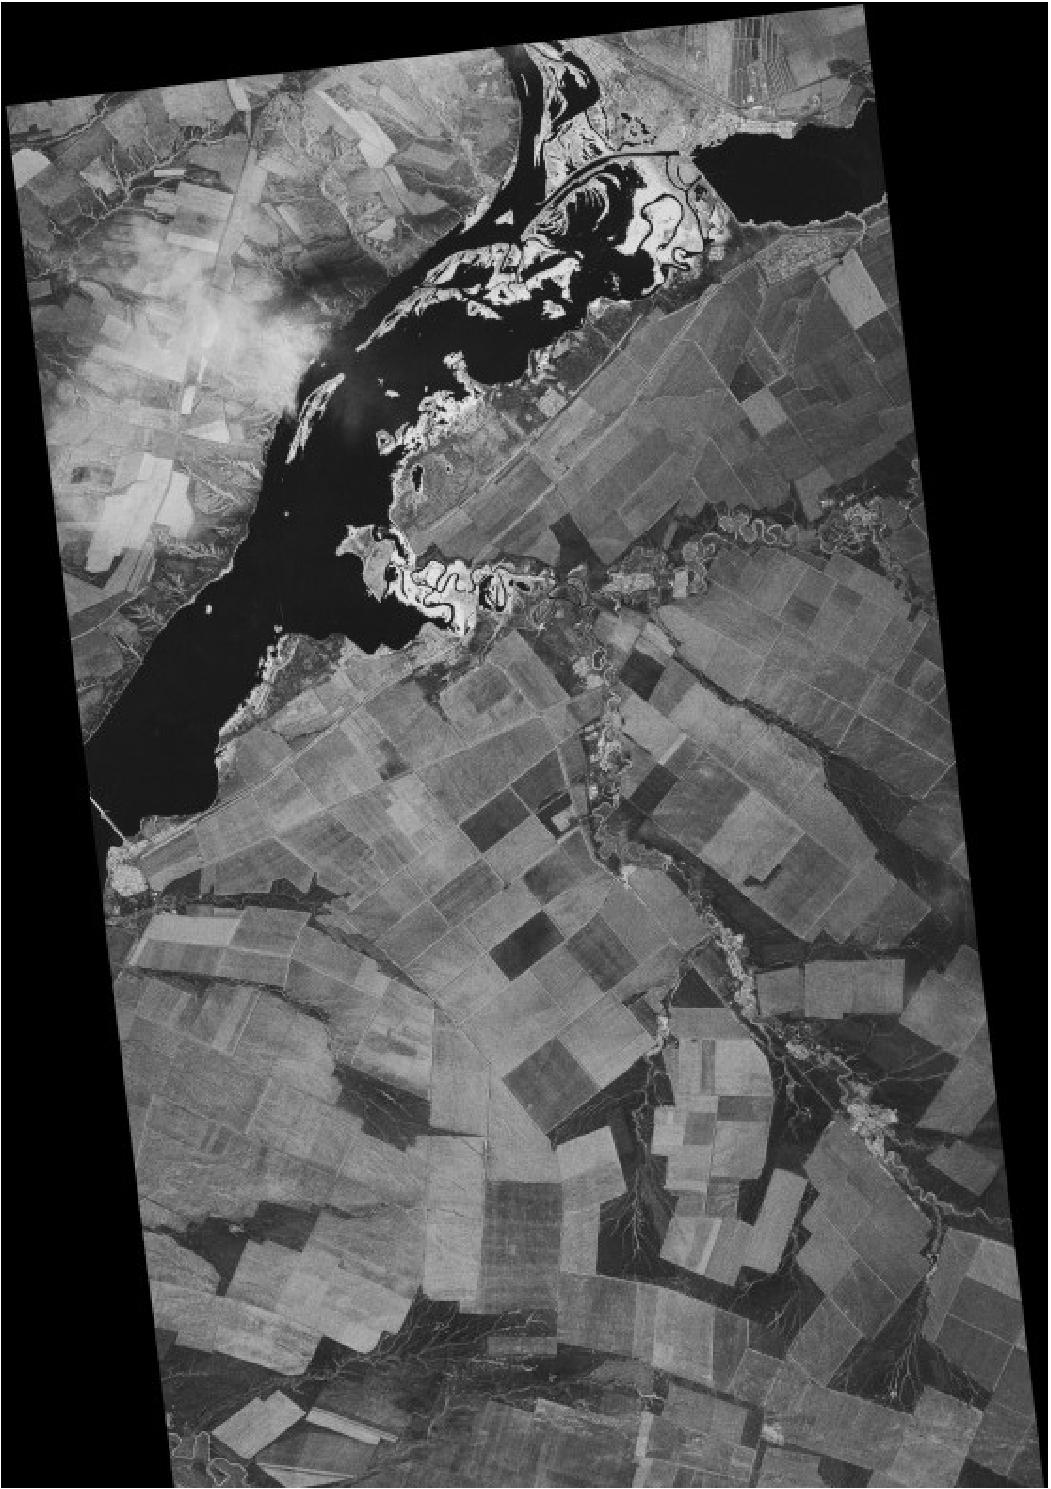 Figure 51: The first TerraSAR-X image of the Tsimlyanskoye reservoir, Russia, taken on June 19, 2007 (image credit: DLR)